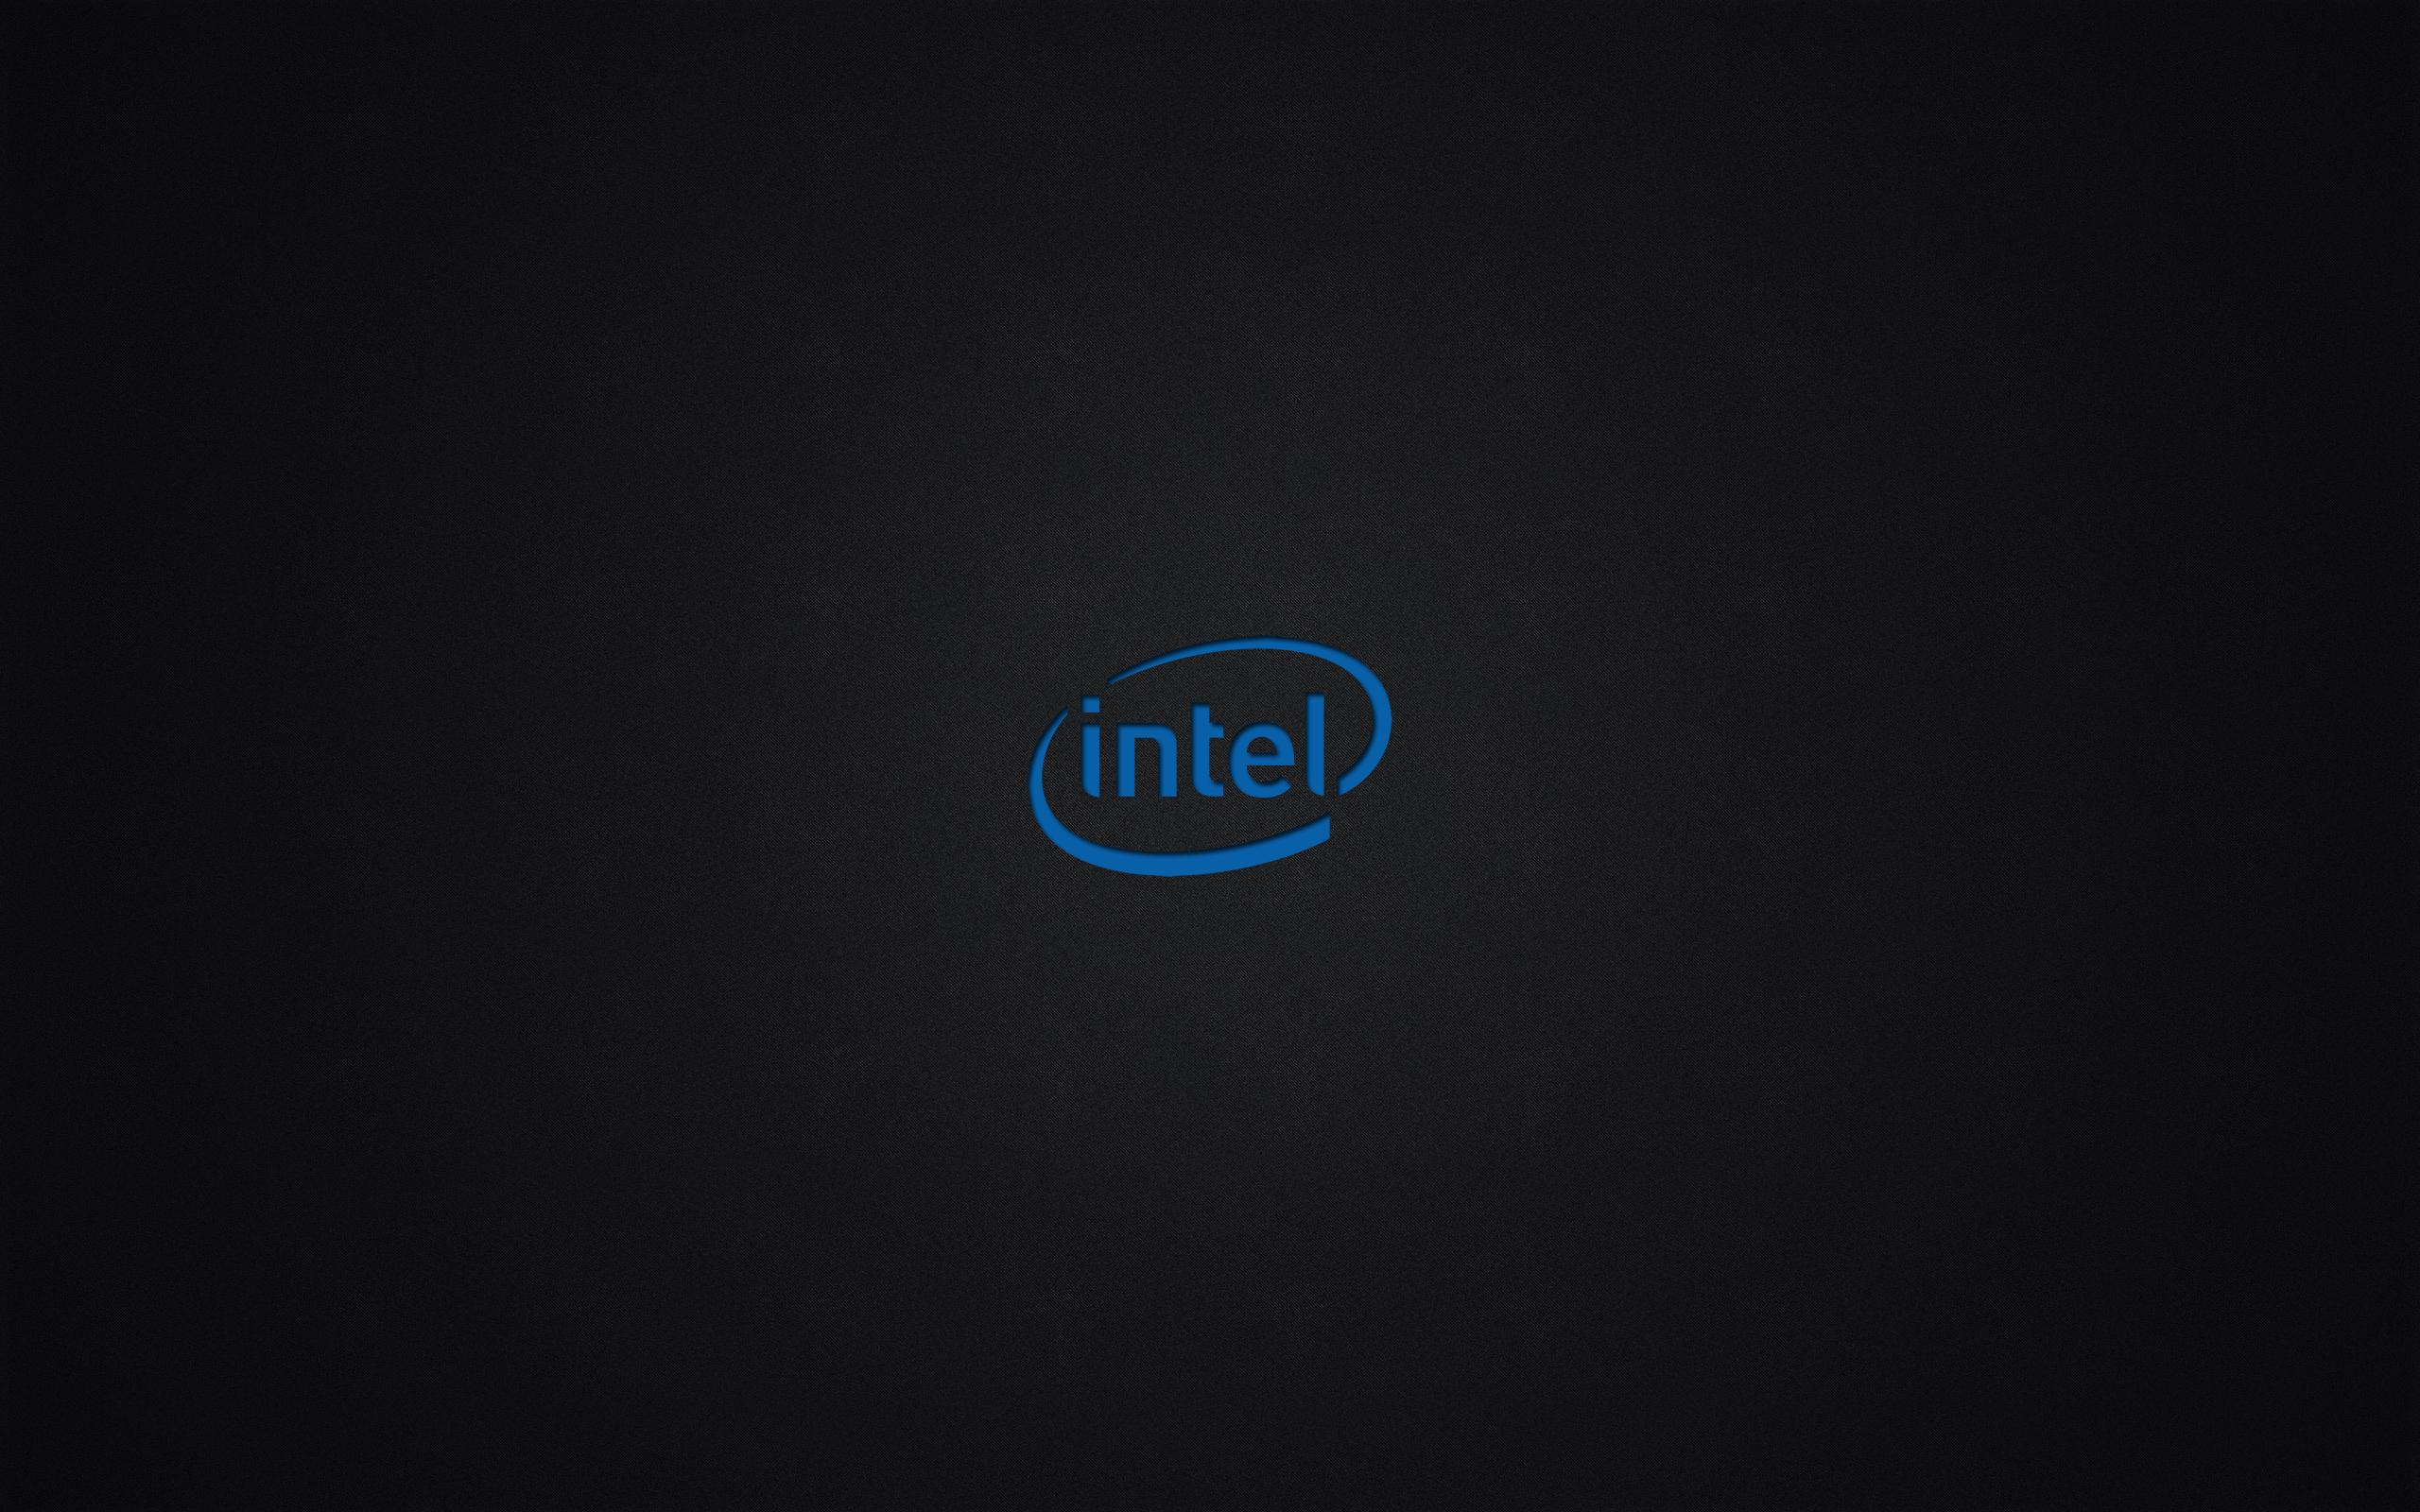 Intel Wallpaper Free Intel Background